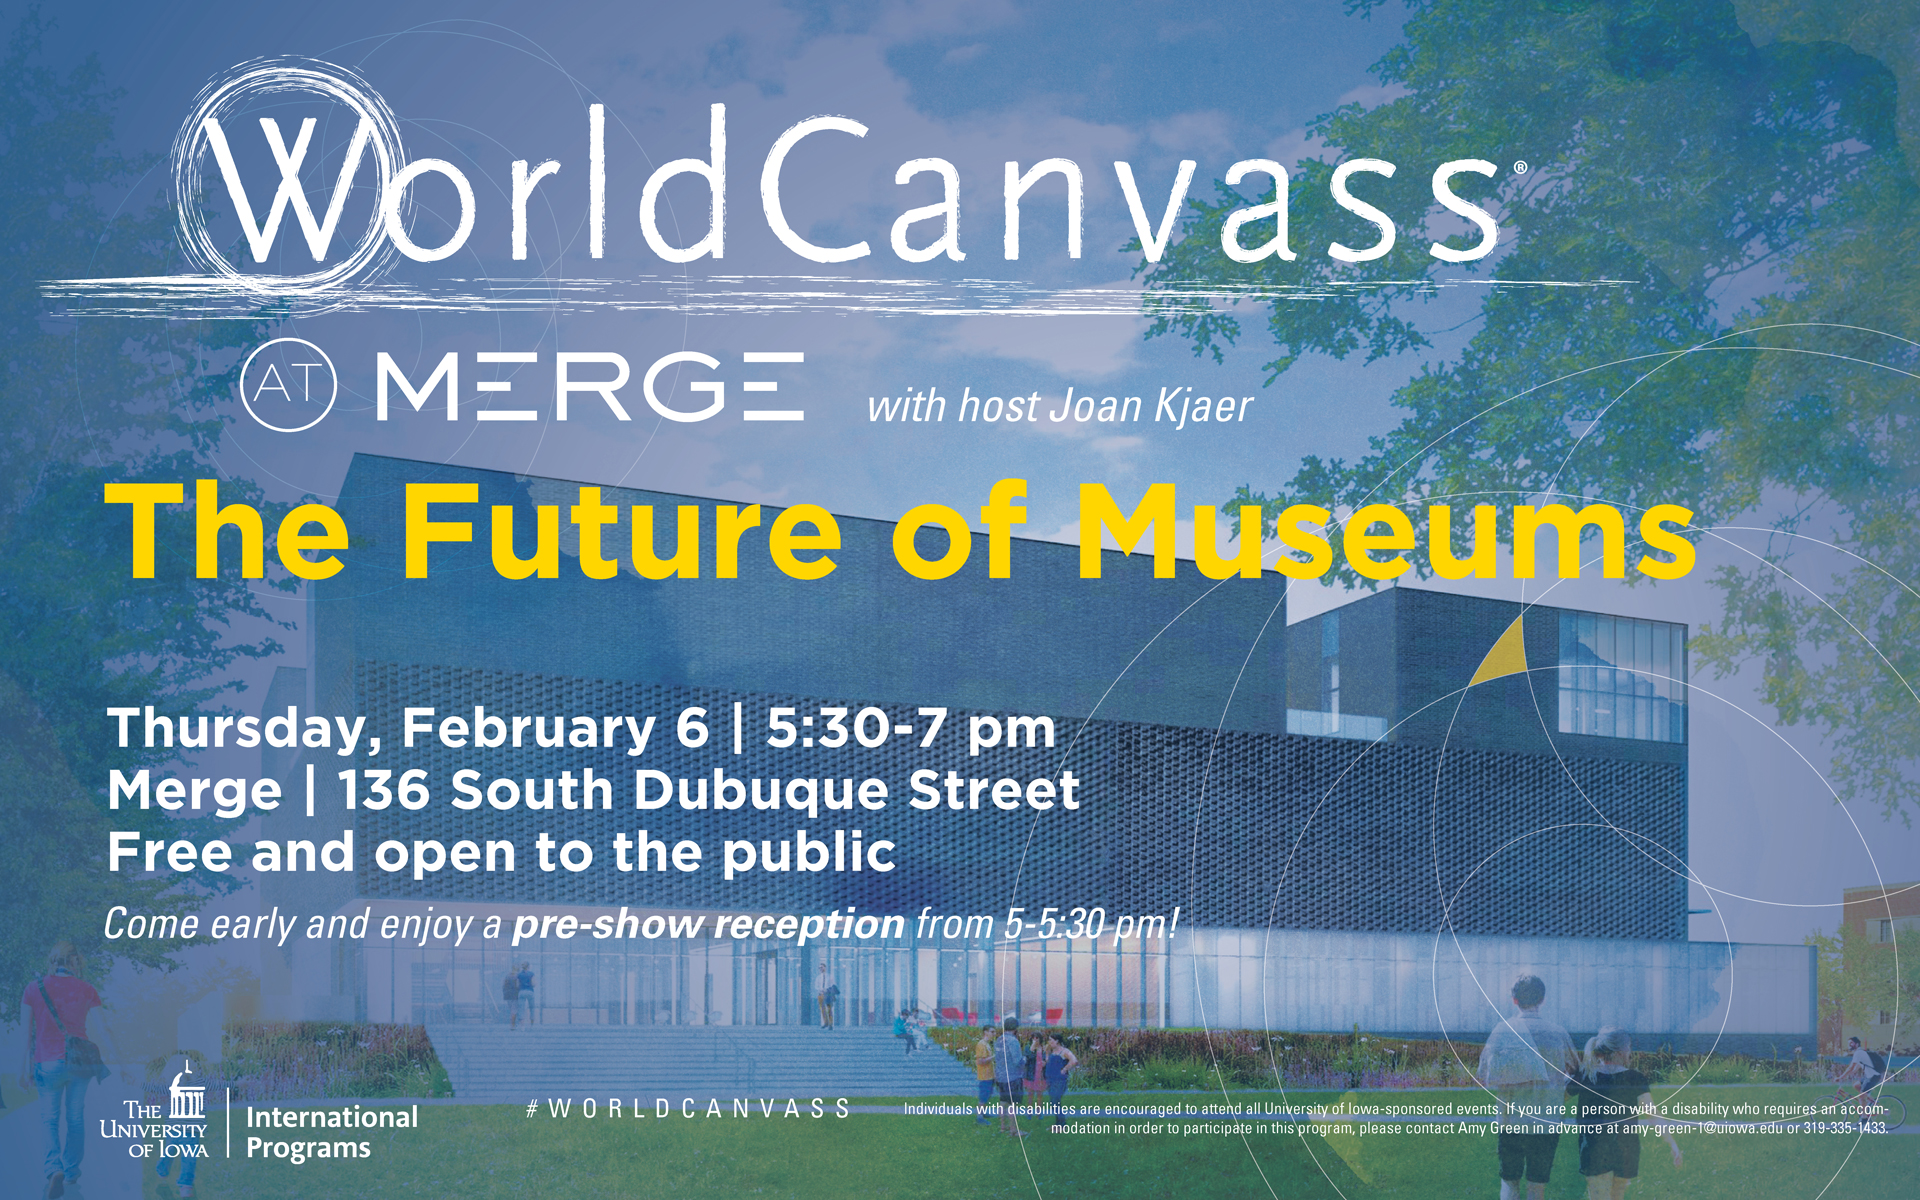 World Canvass The Future of Museuma Thursday Feburary 6 5:30-7 @ MErge 136 S Dubuque st.